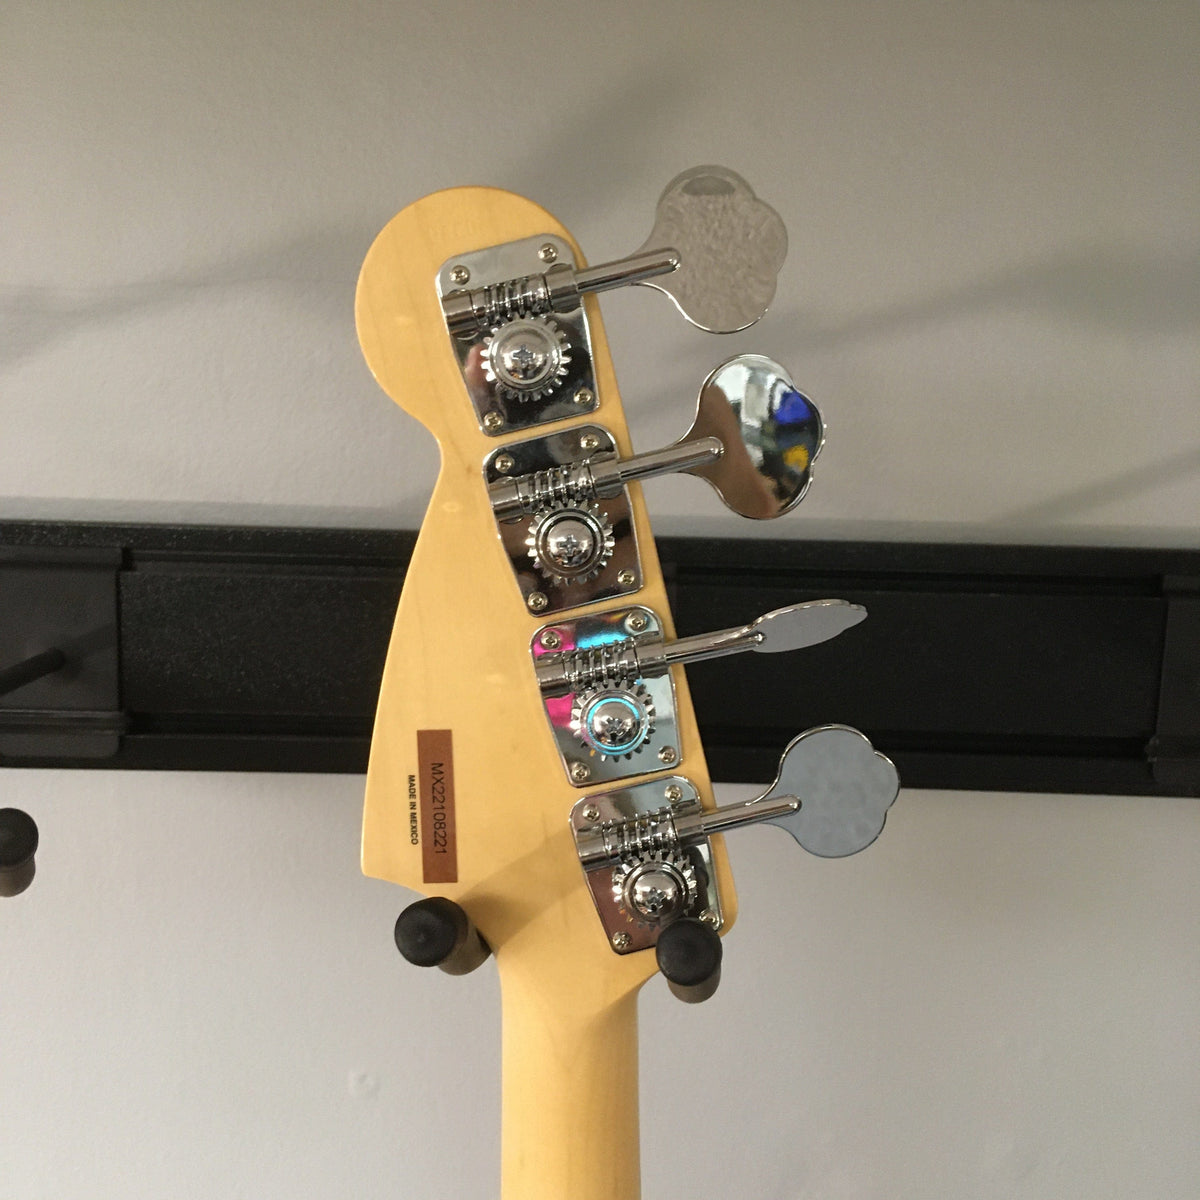 Fender Player Mustang Bass PJ Sherwood Green Refurb...